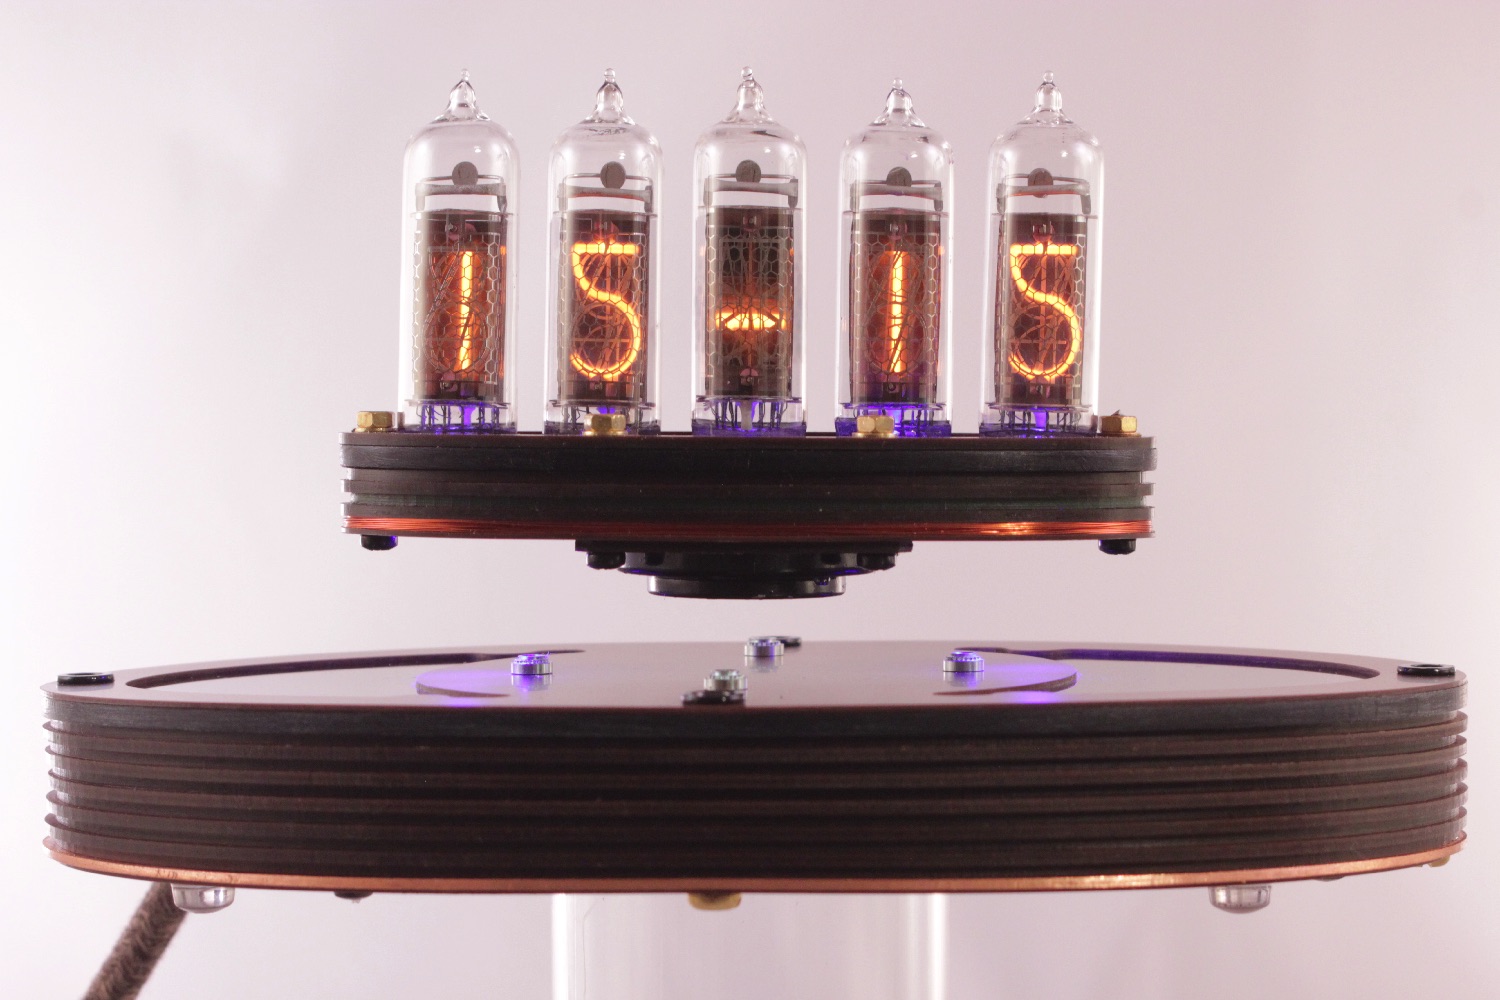 levitating clock kickstarter img 7163